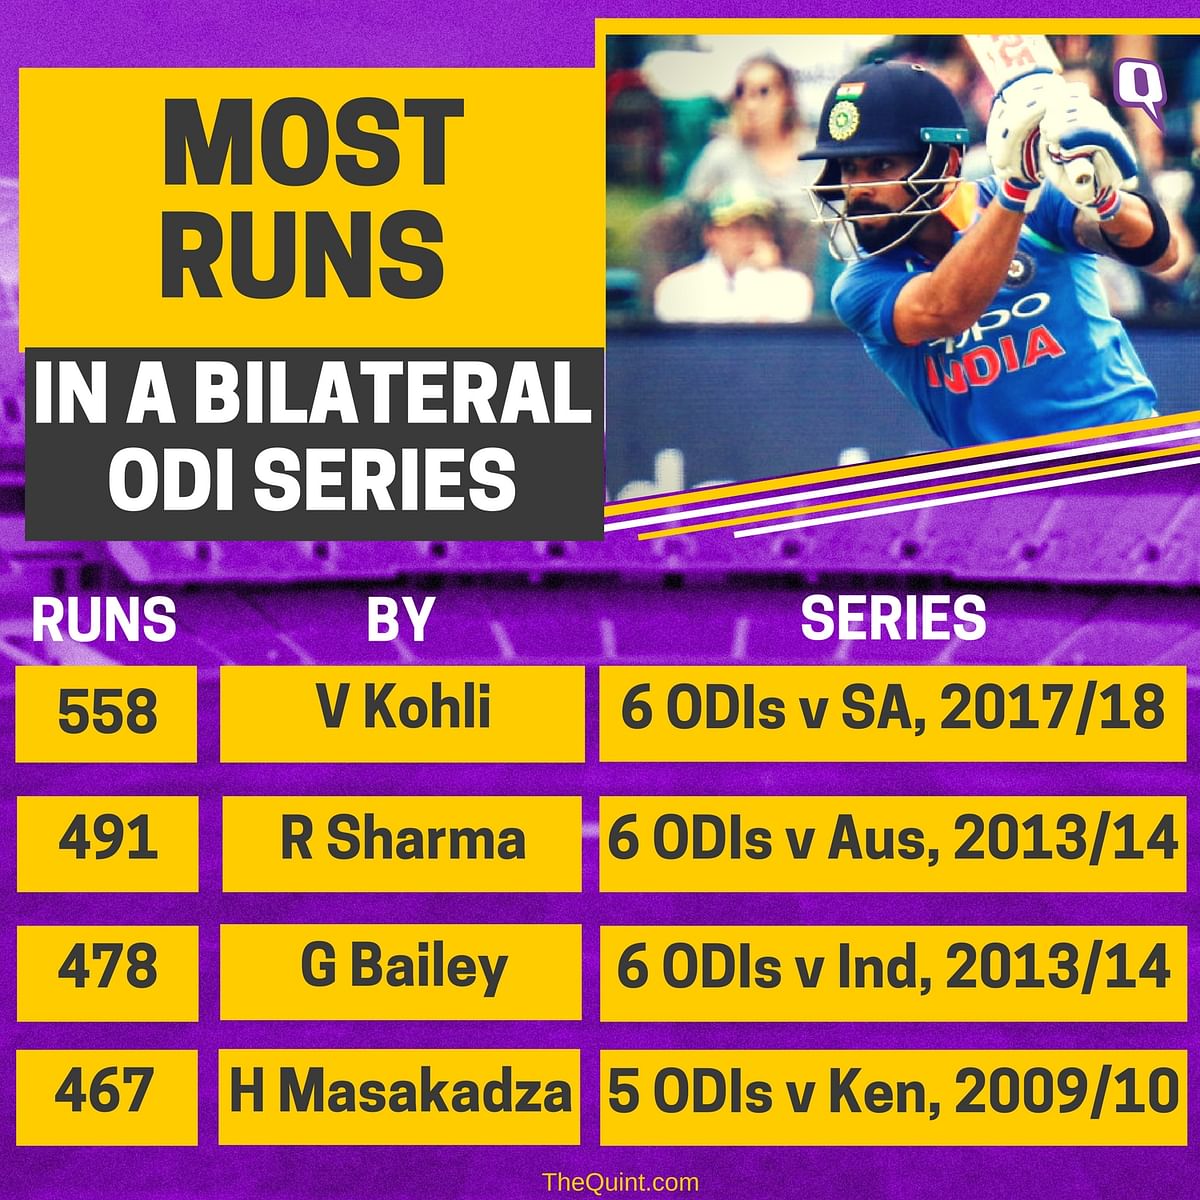 Captain Virat Kohli surpassed Rohit Sharma to become the first batsman to score 500 runs in a bilateral ODI series.